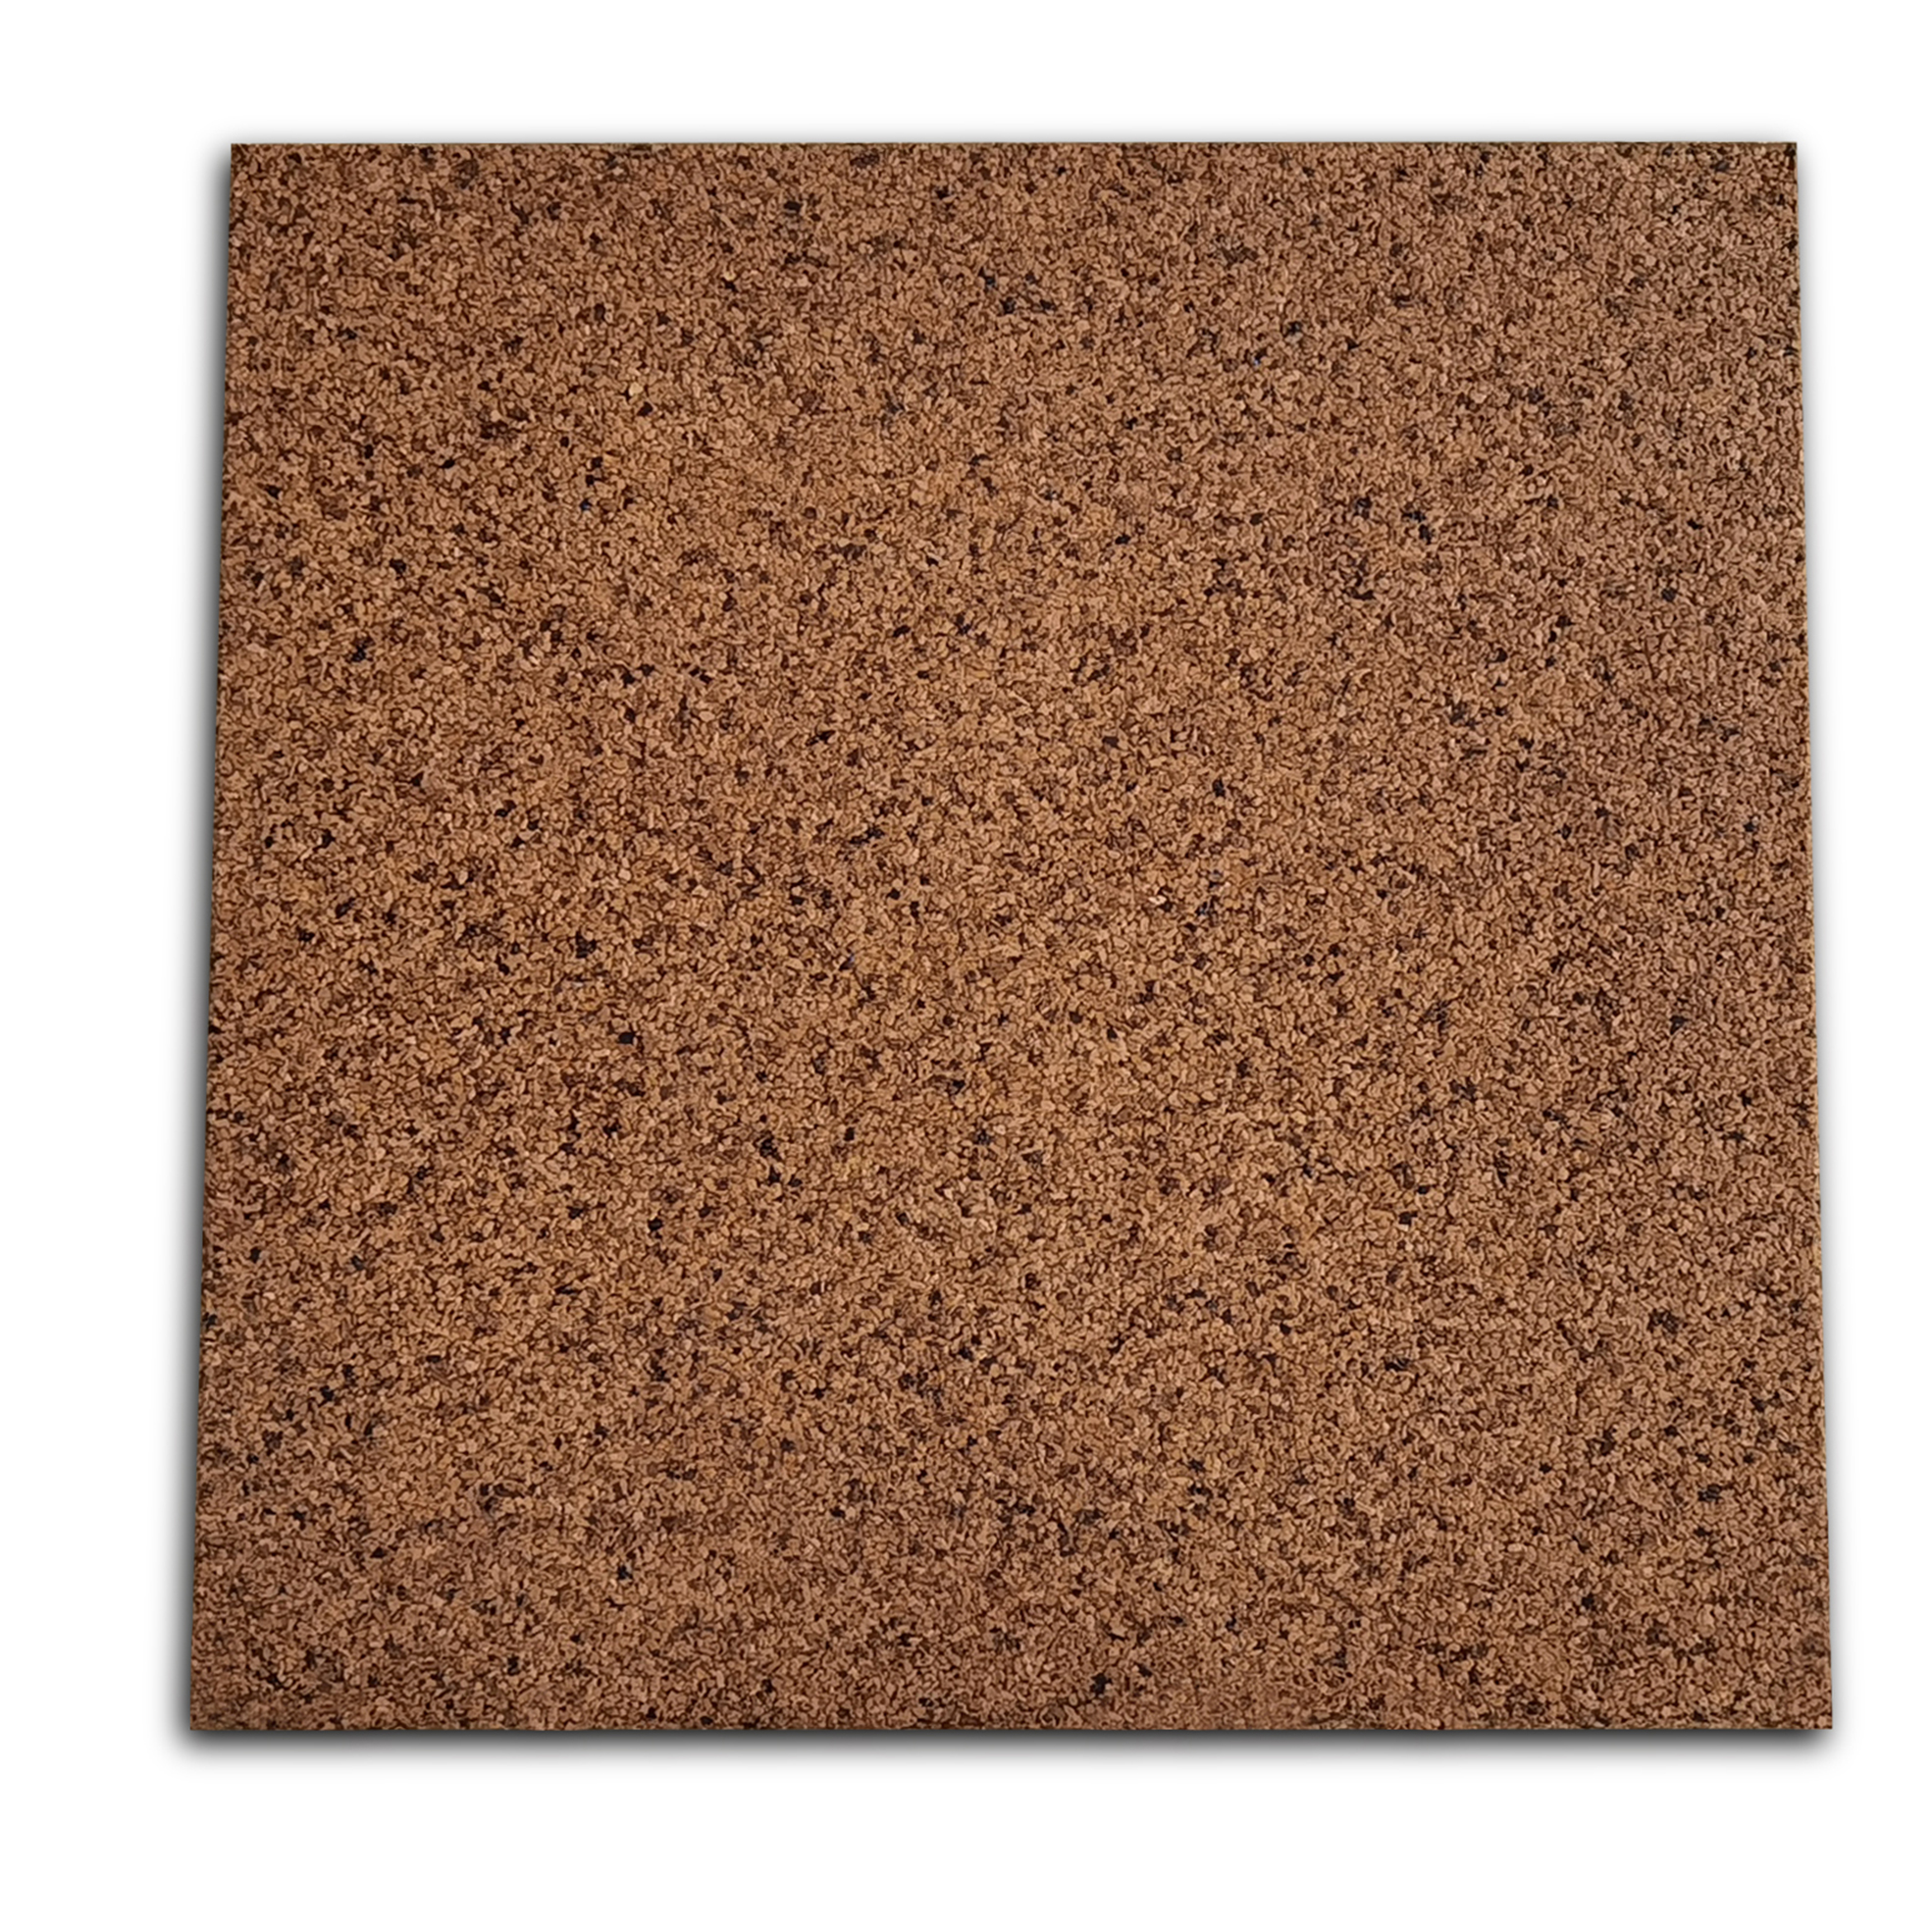 Cork rubber tiles